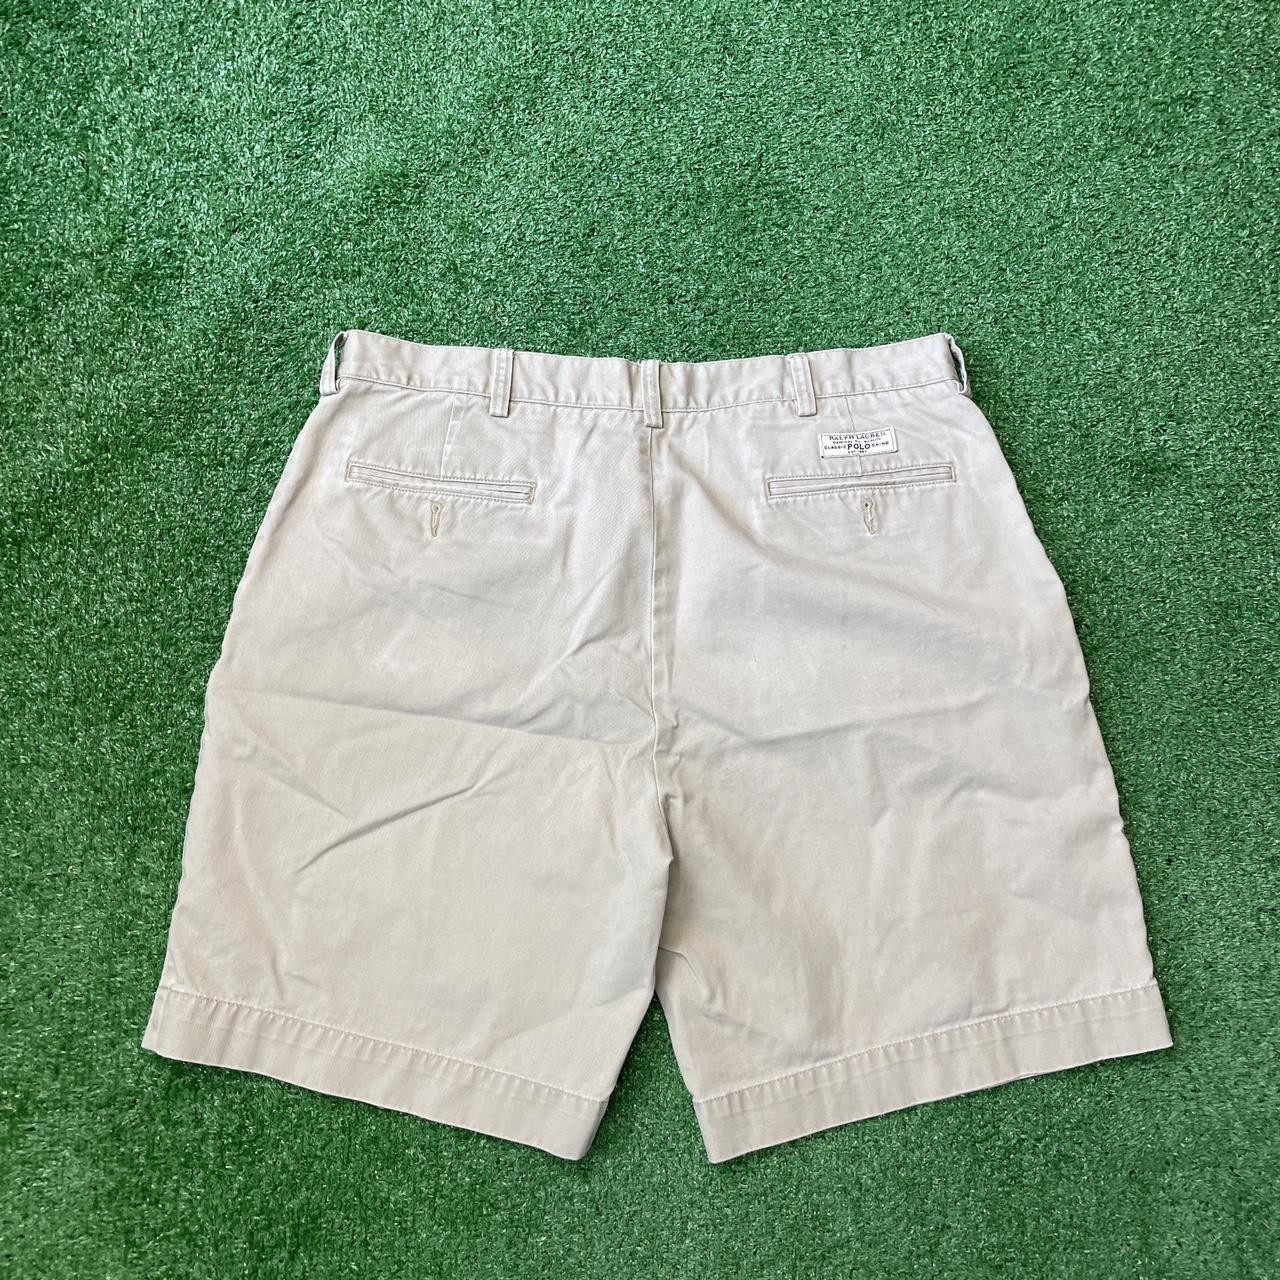 Polo Ralph Lauren Beige Shorts, 36x9 LO 12